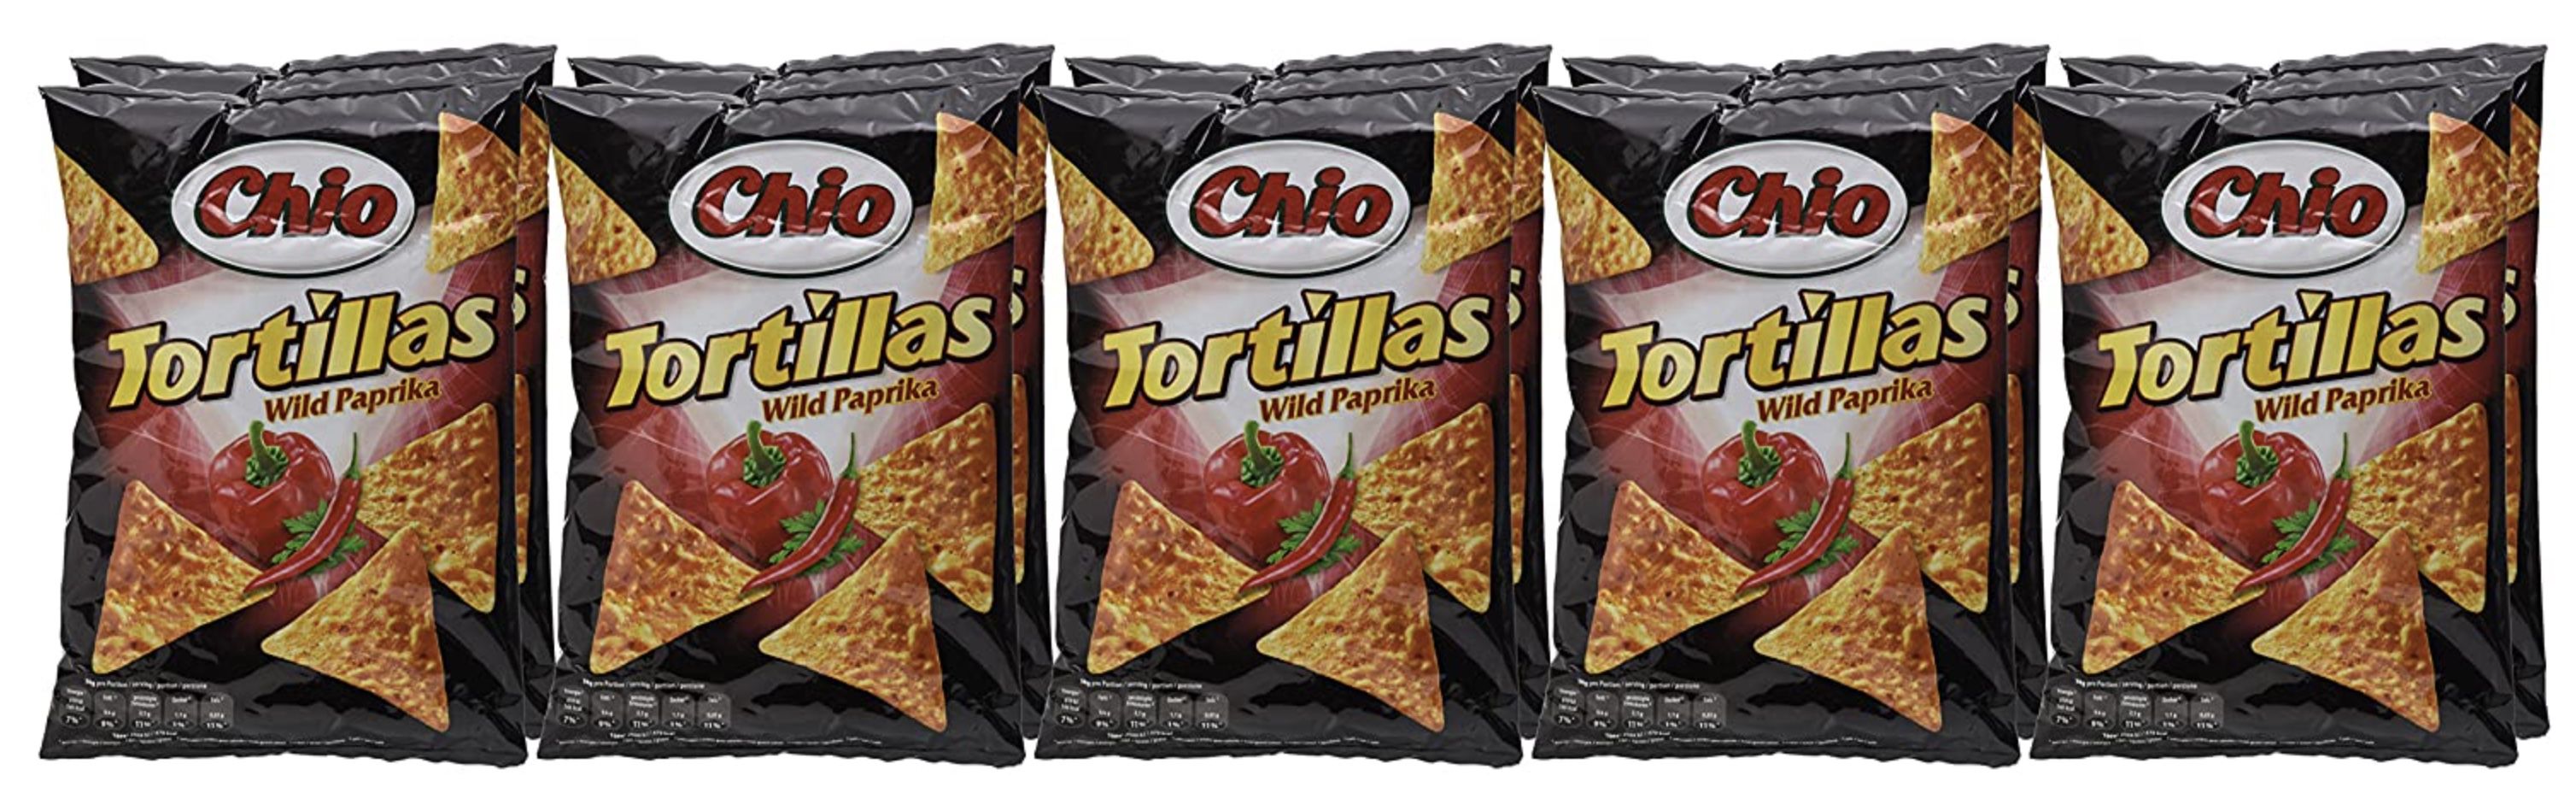 10x Chio Tortilla Chips Wild Paprika oder Salted je 8,88€ (statt 16€)   Prime Sparabo